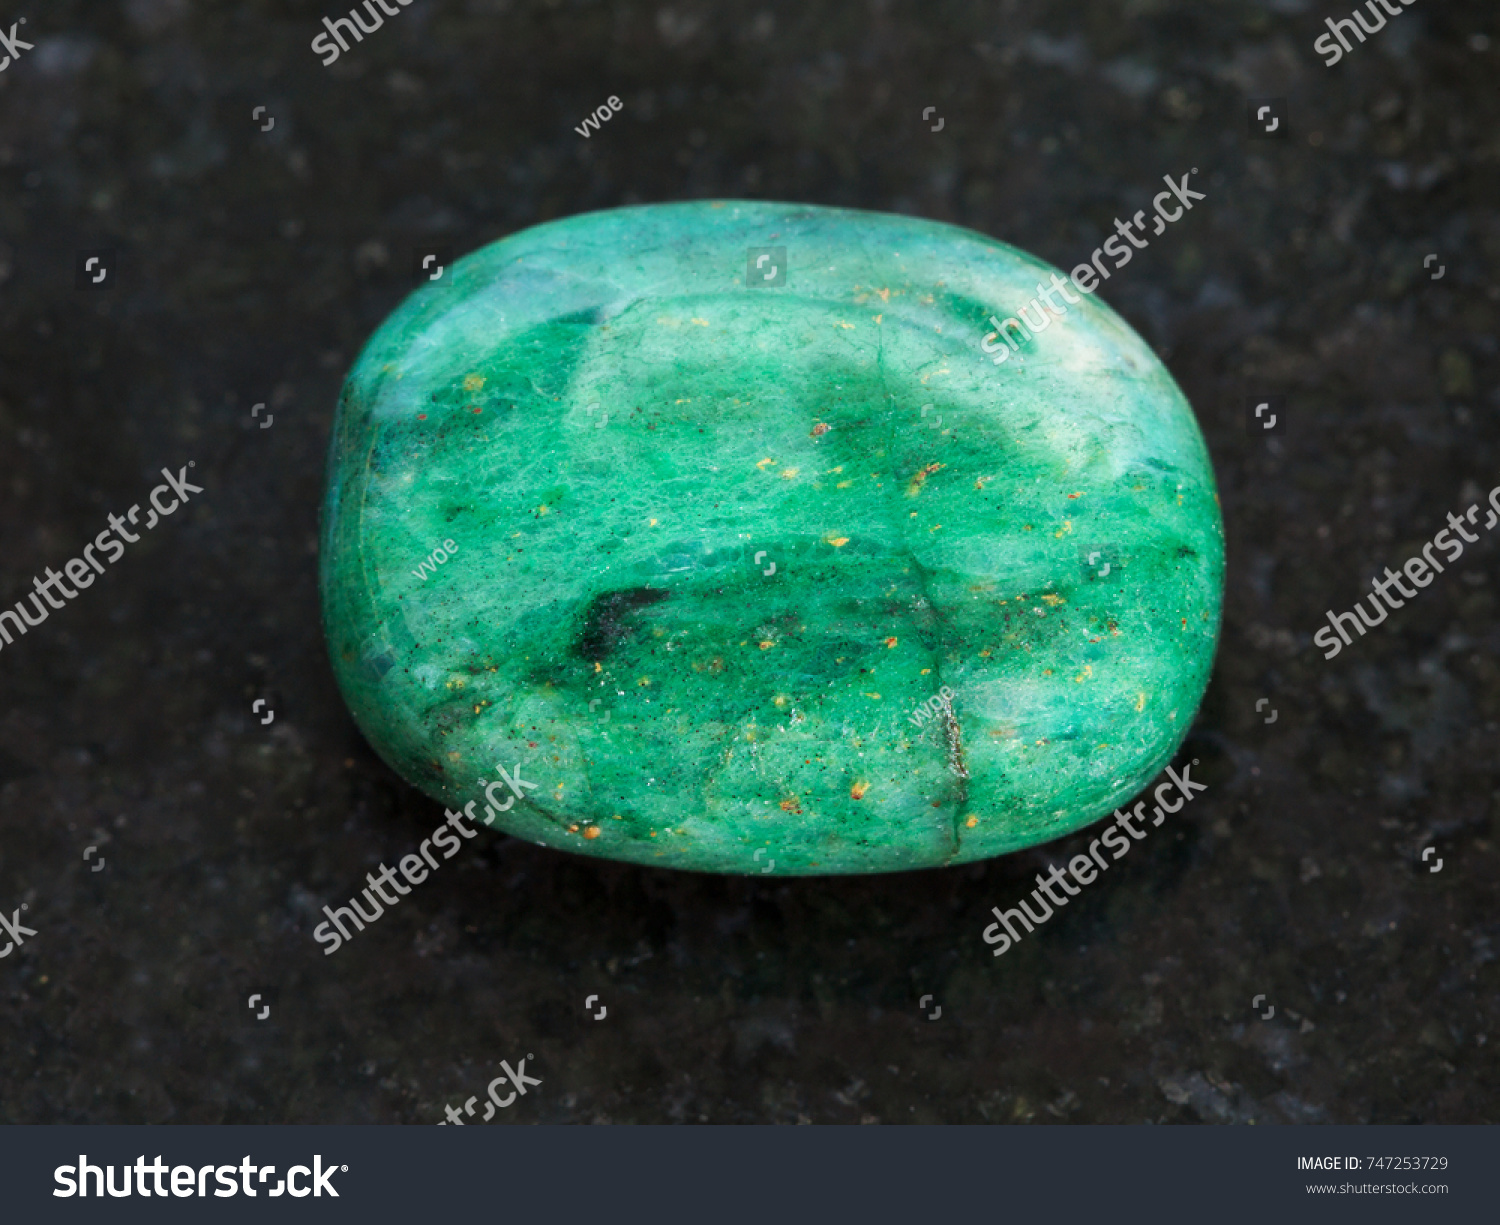 macro shooting of natural mineral rock specimen - polished green beryl gemstone on dark granite background #747253729